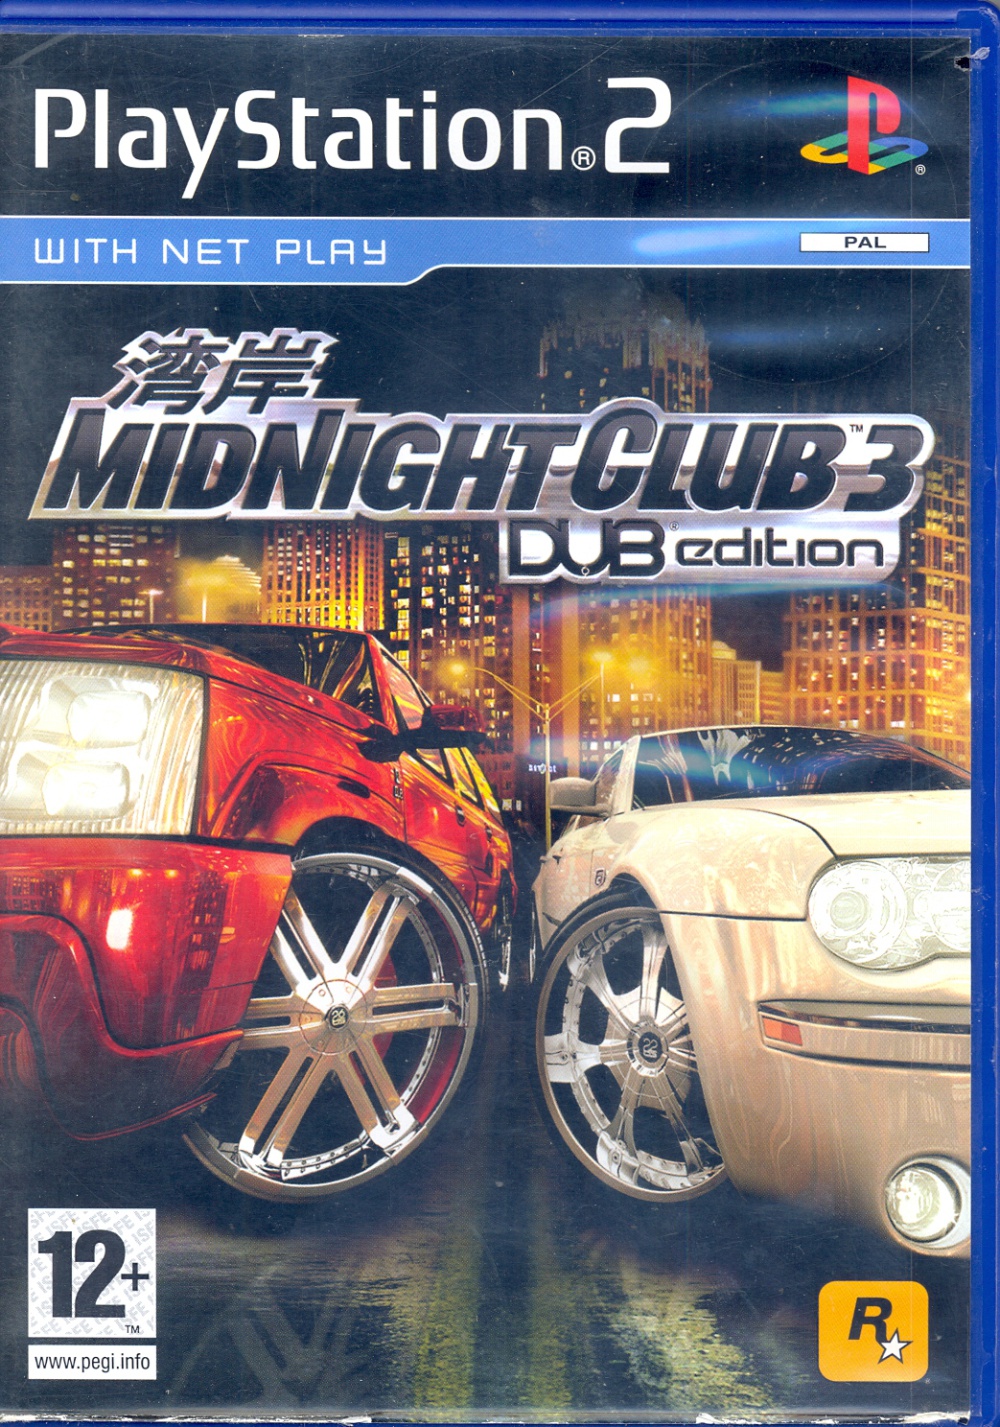 Midnight Club 3 DUB edition - Software - Game - Computing History